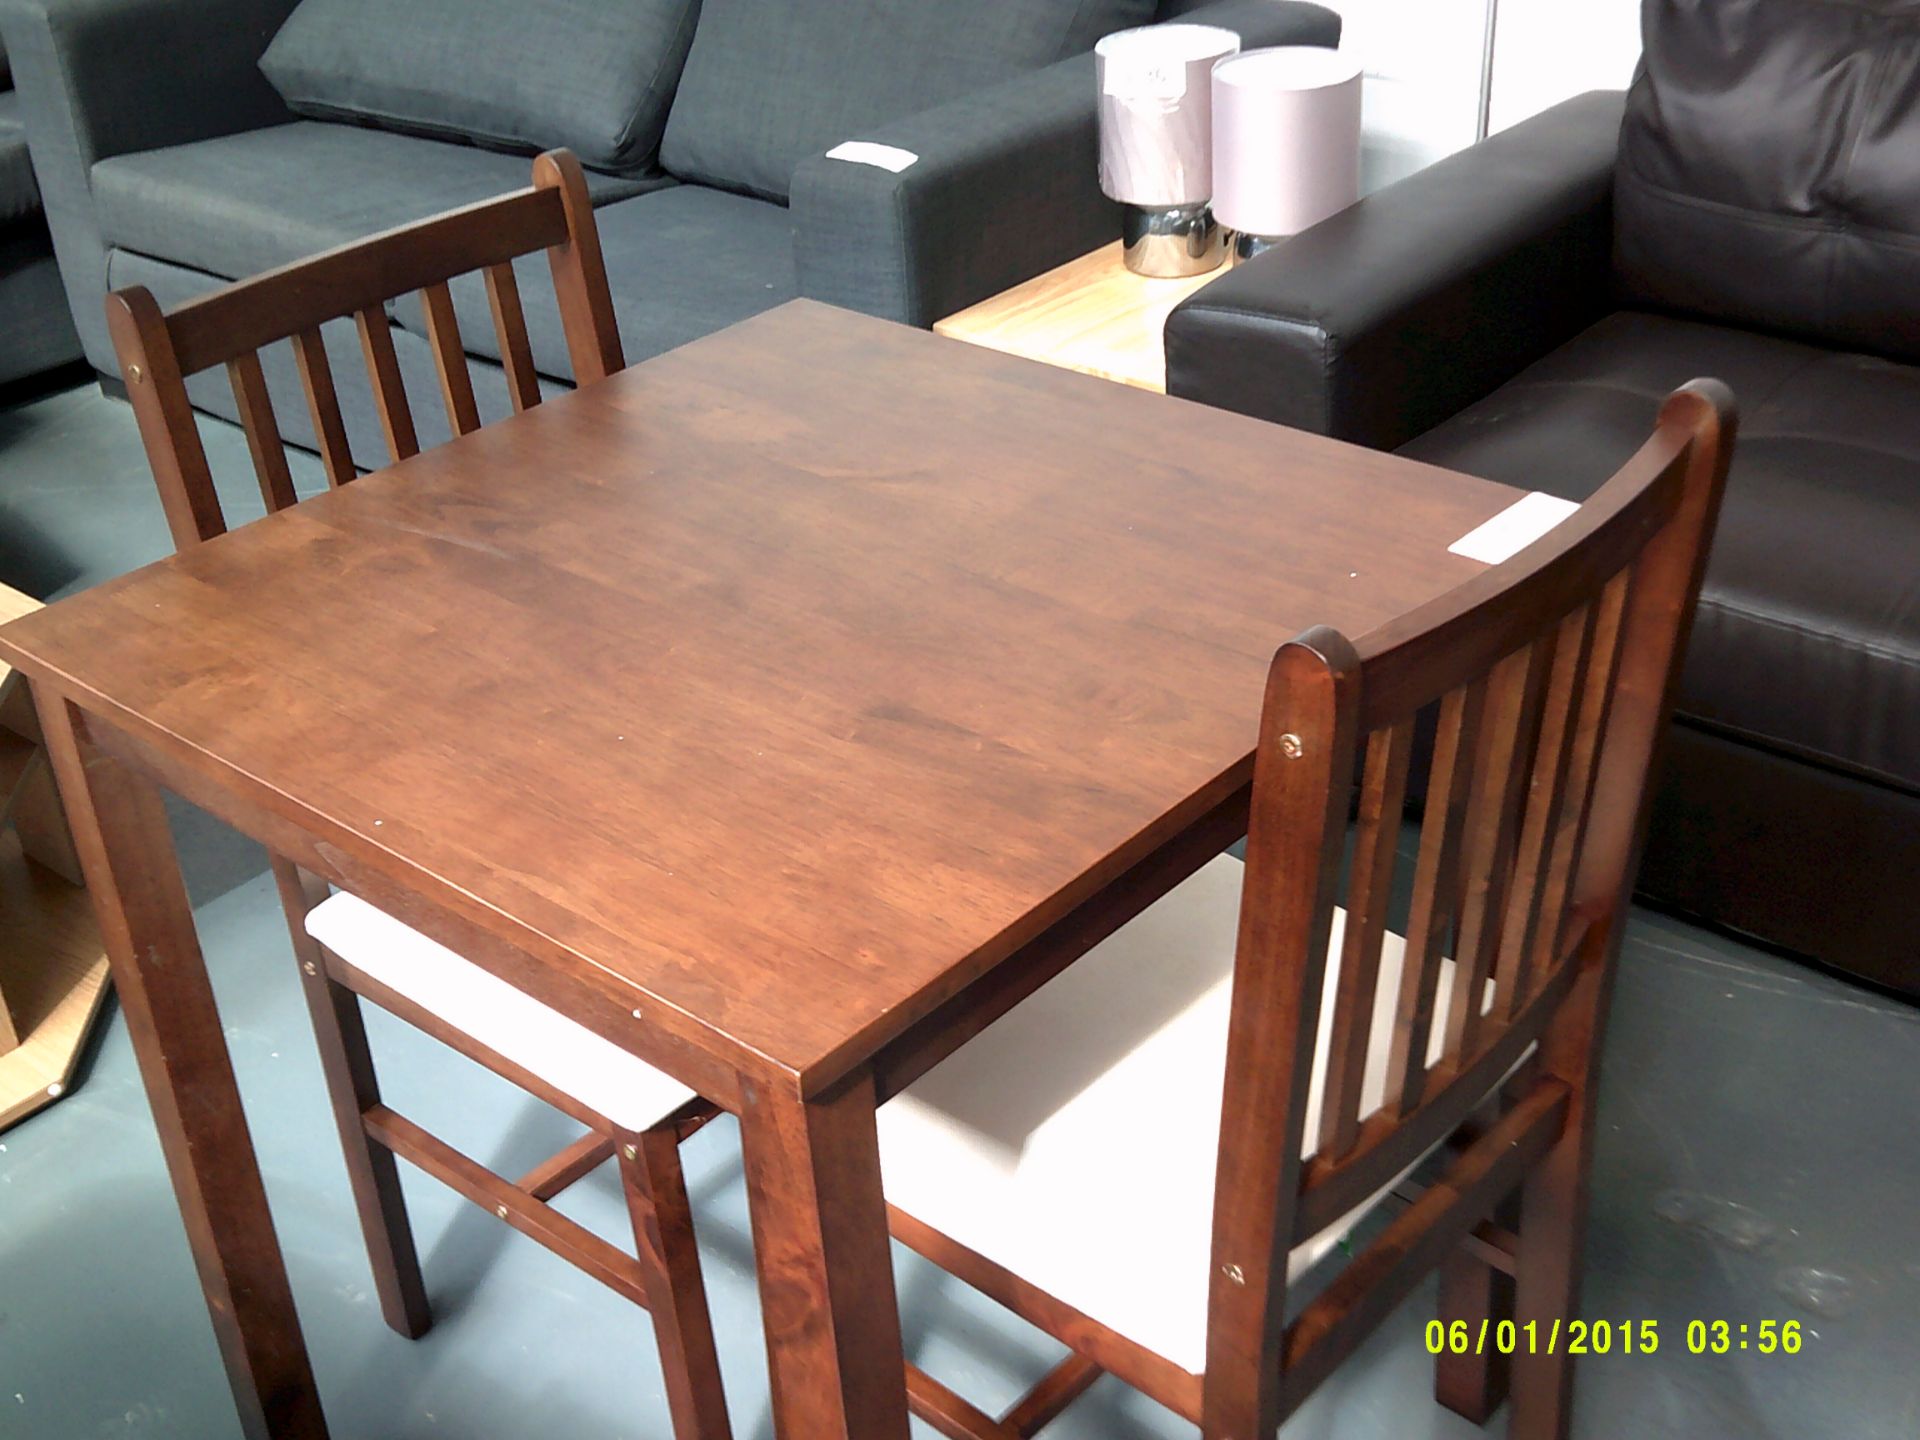 Small Dark Wood Table & 2 Chairs Customer Returns